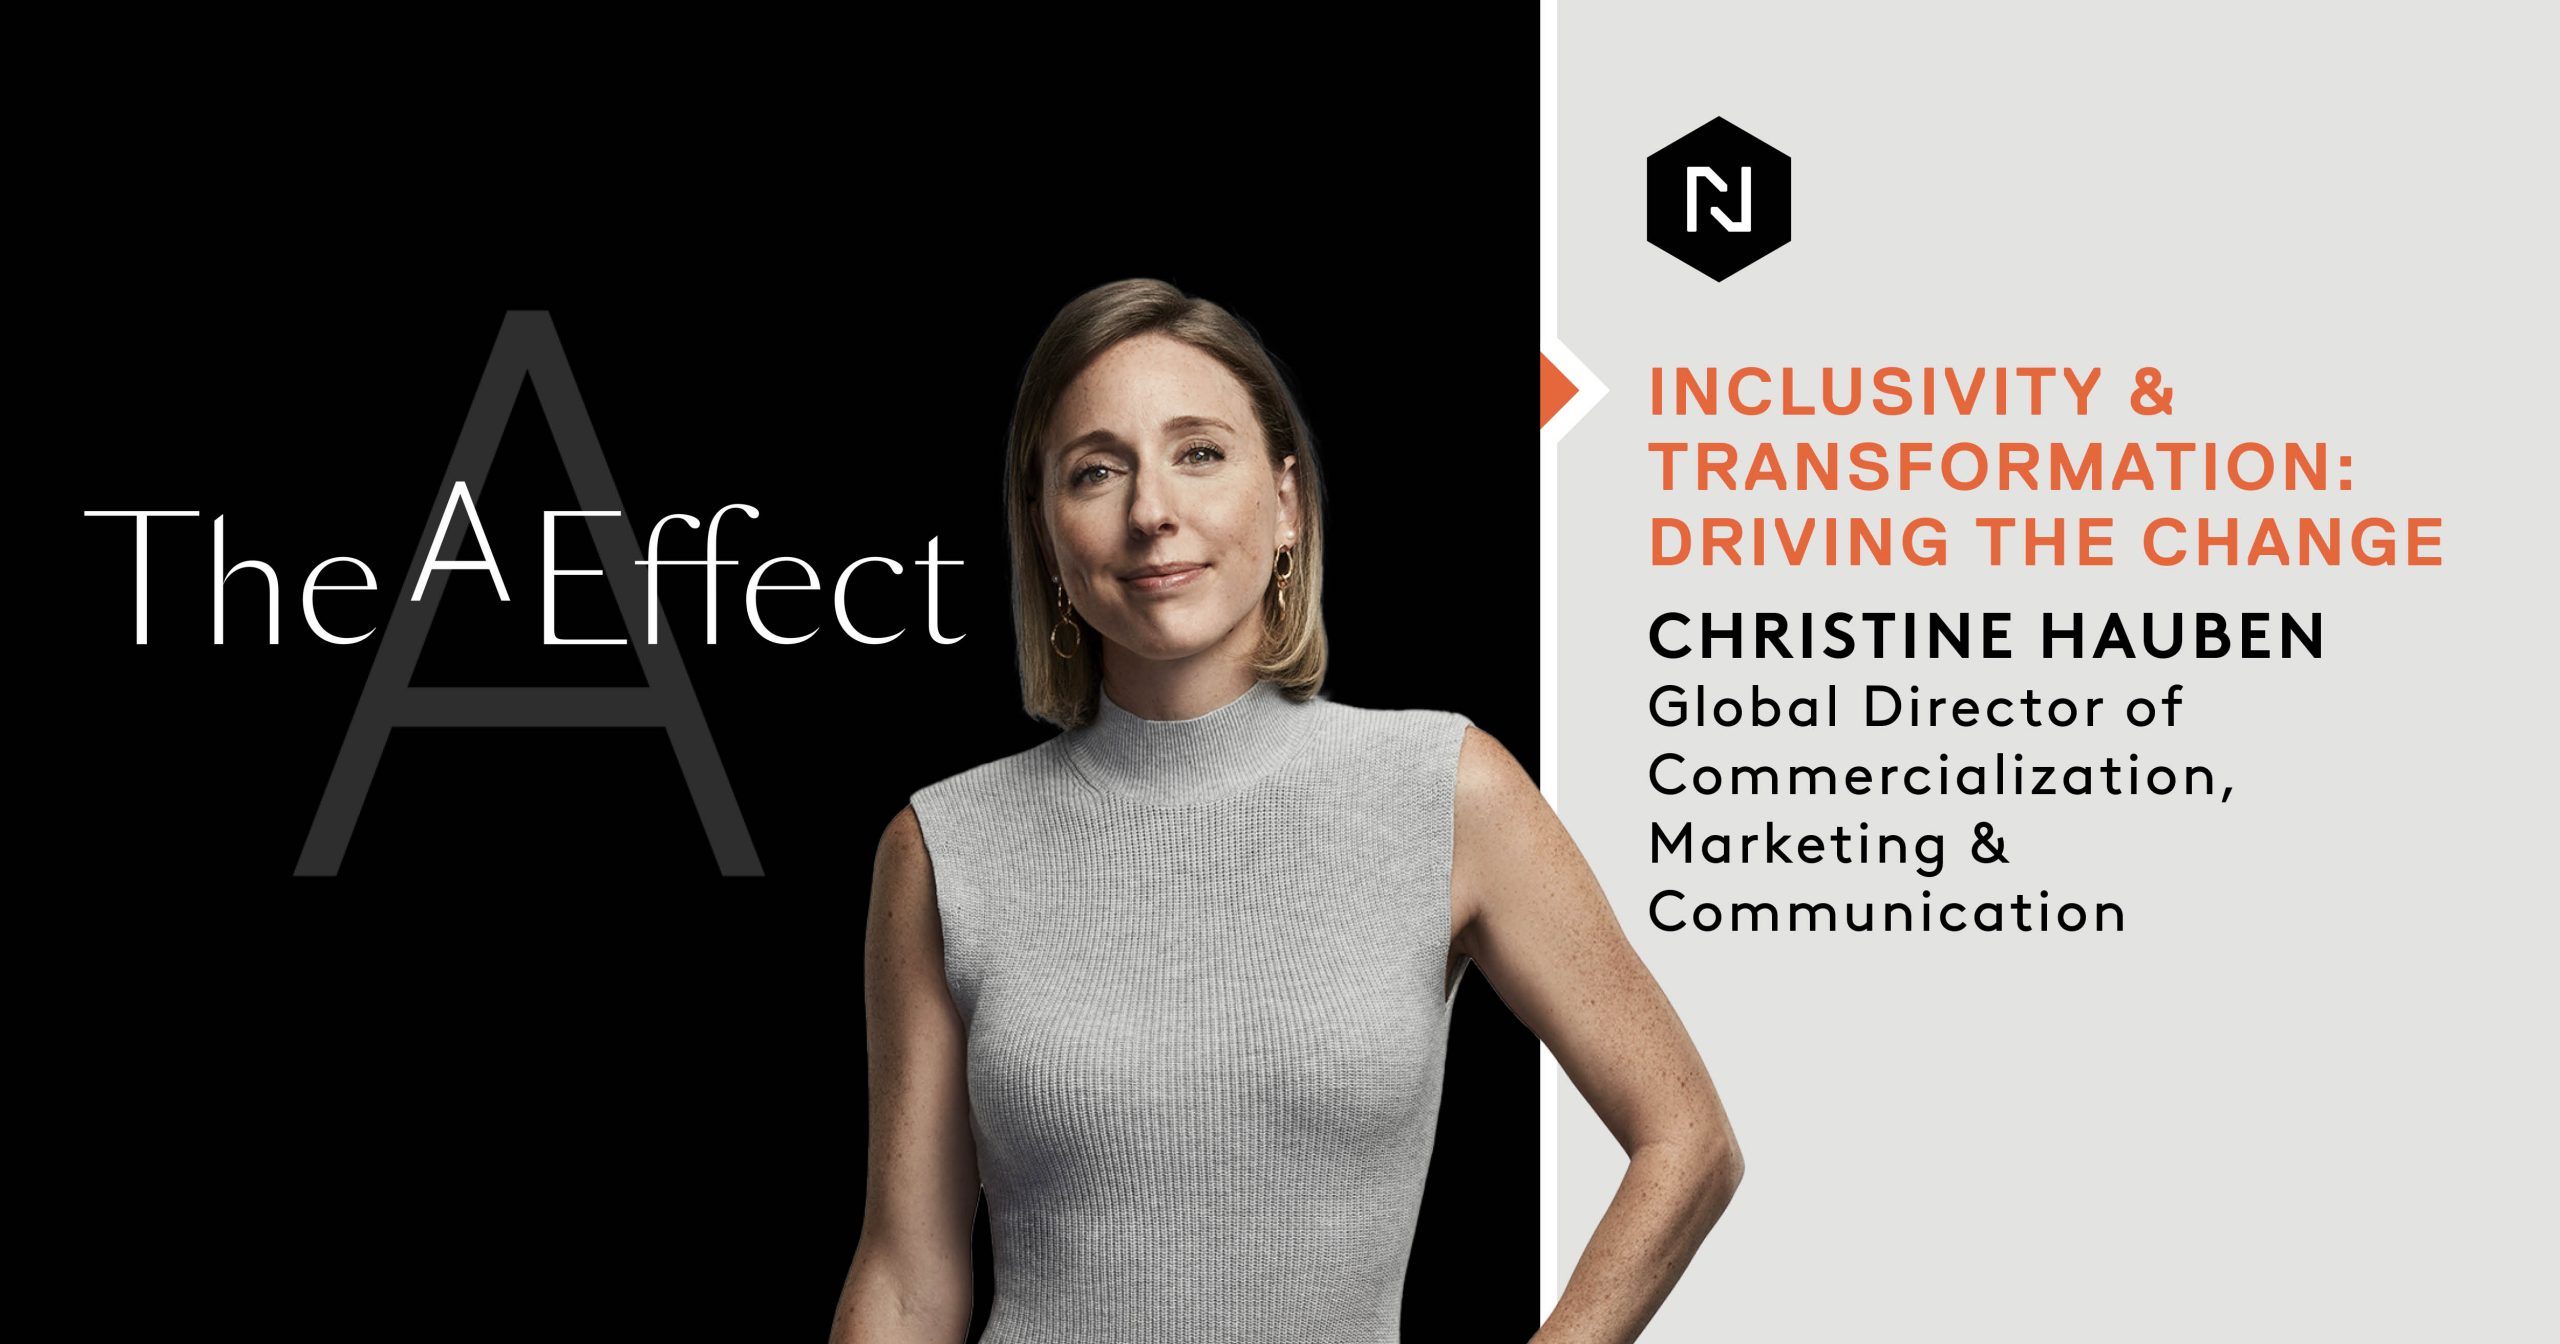 The A Effect Initiative: Meet Christine Hauben, Global Director